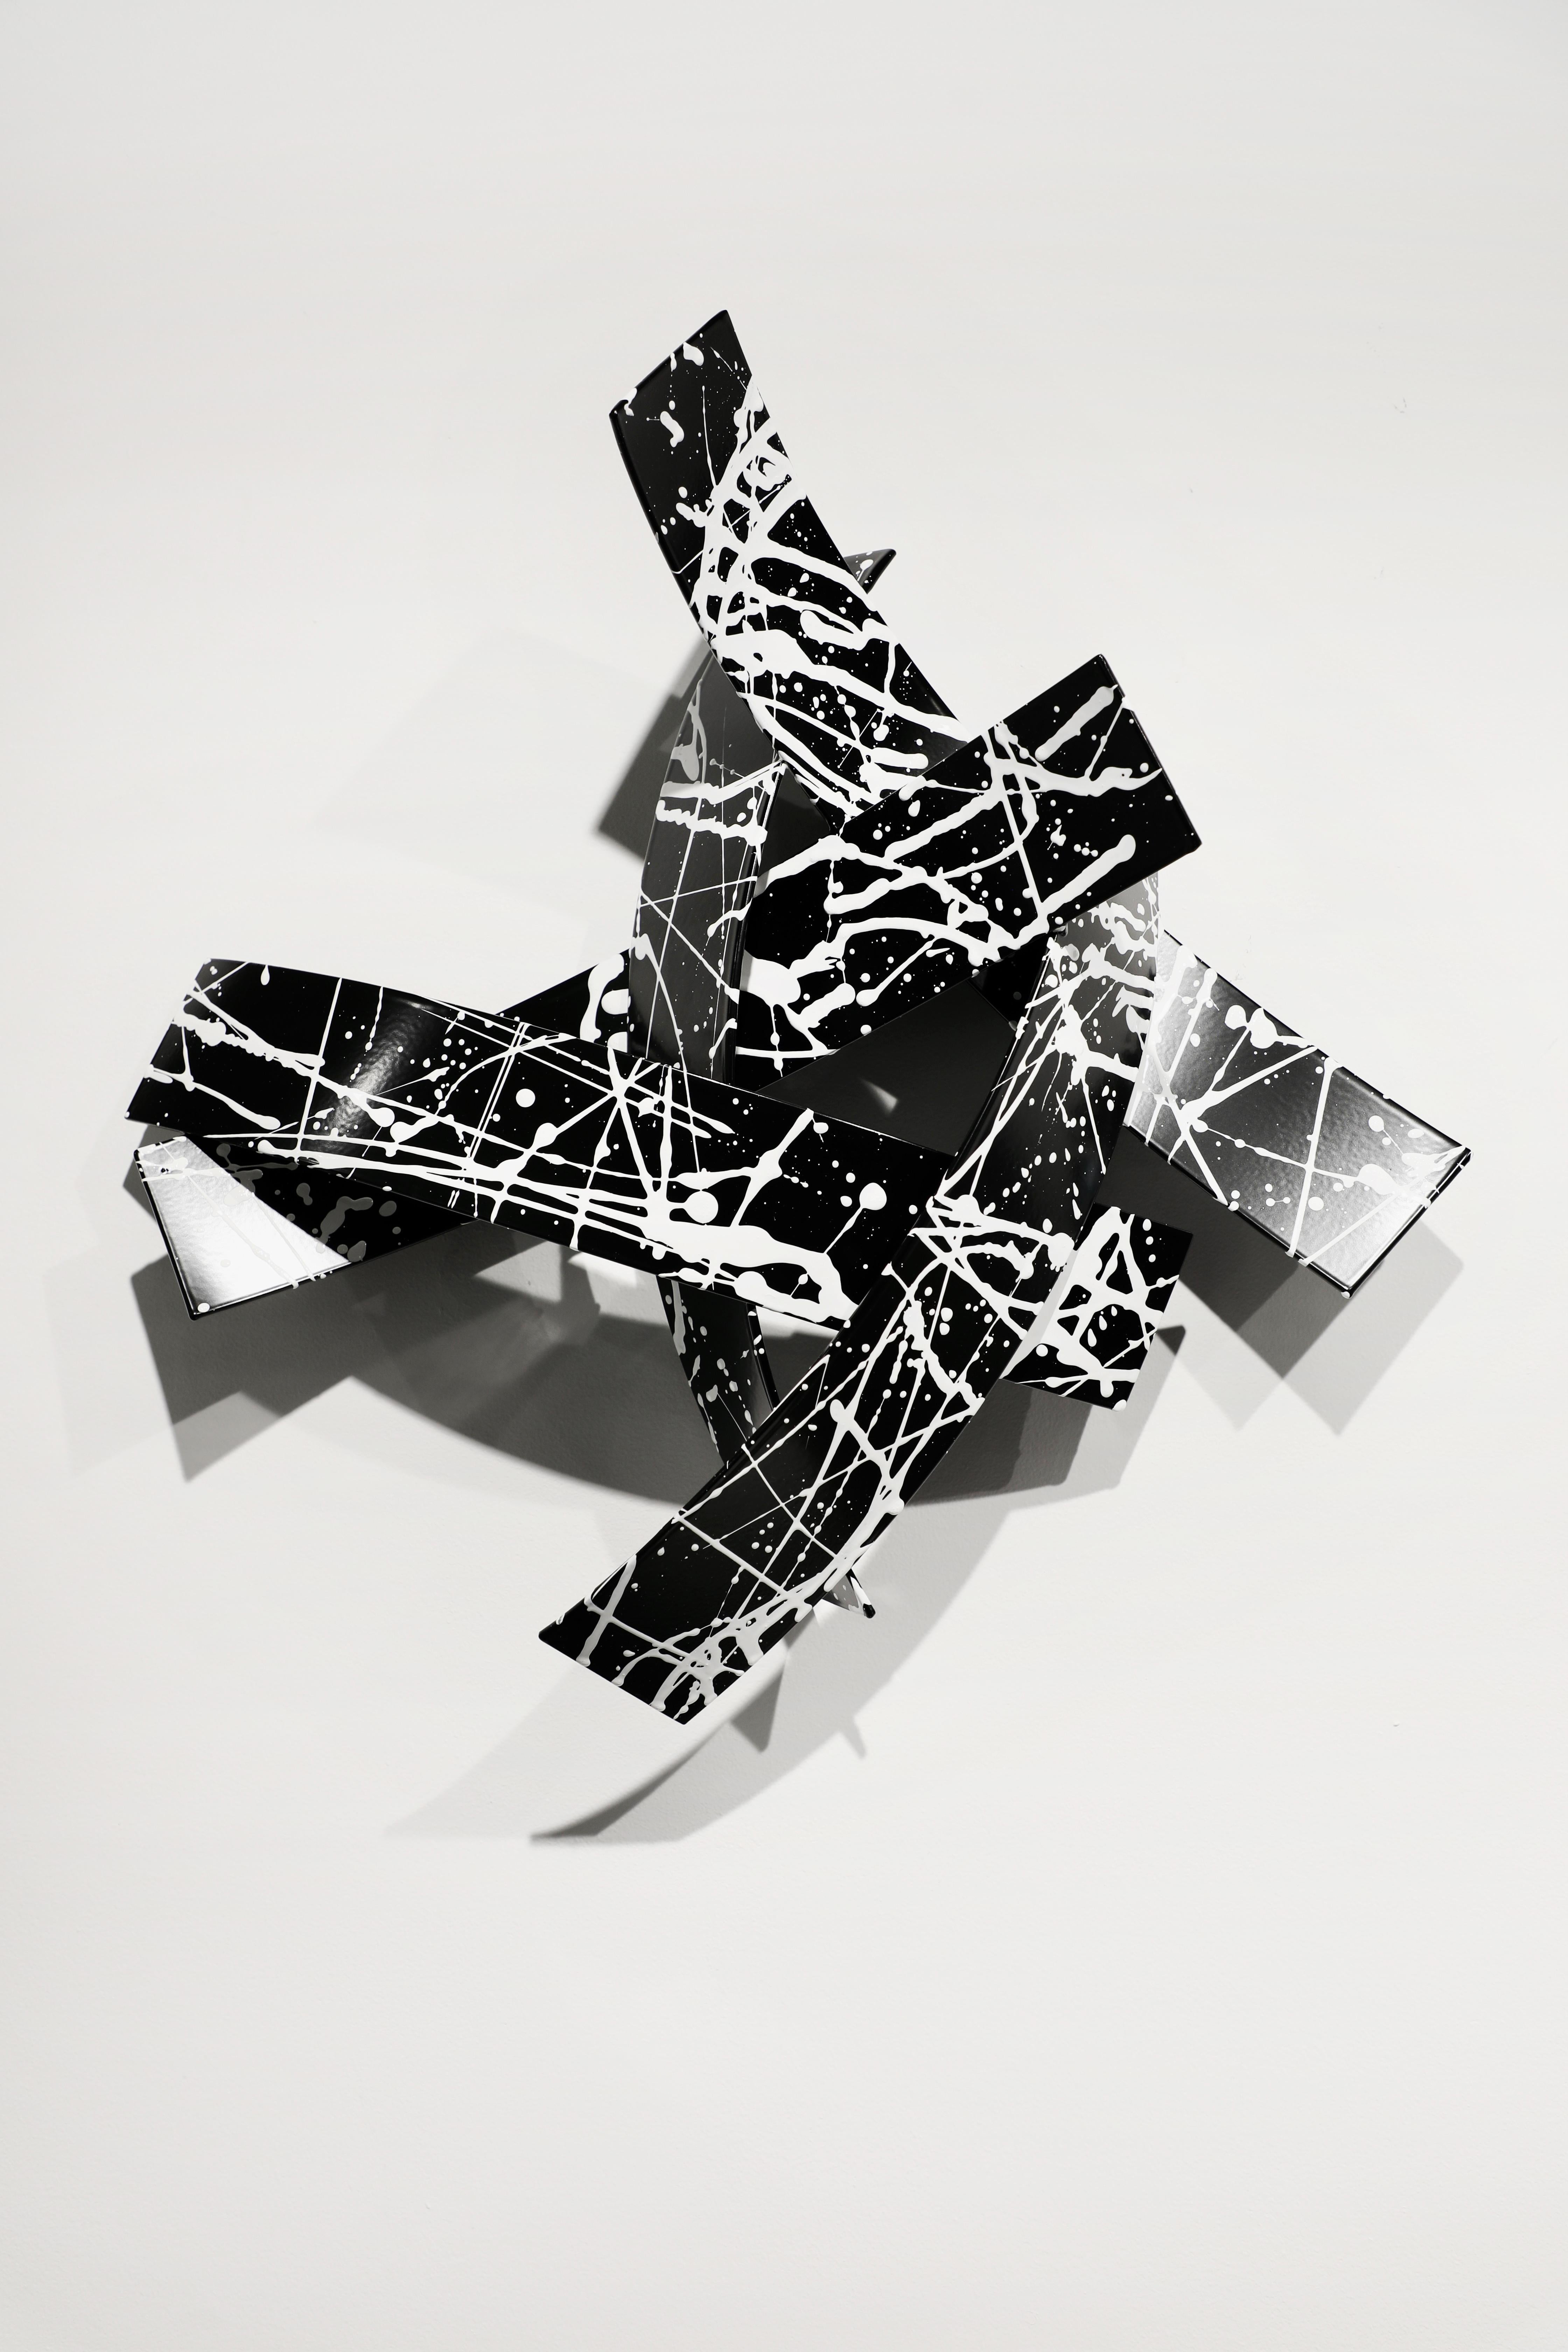 Matt Devine Abstract Sculpture - Release Study #2